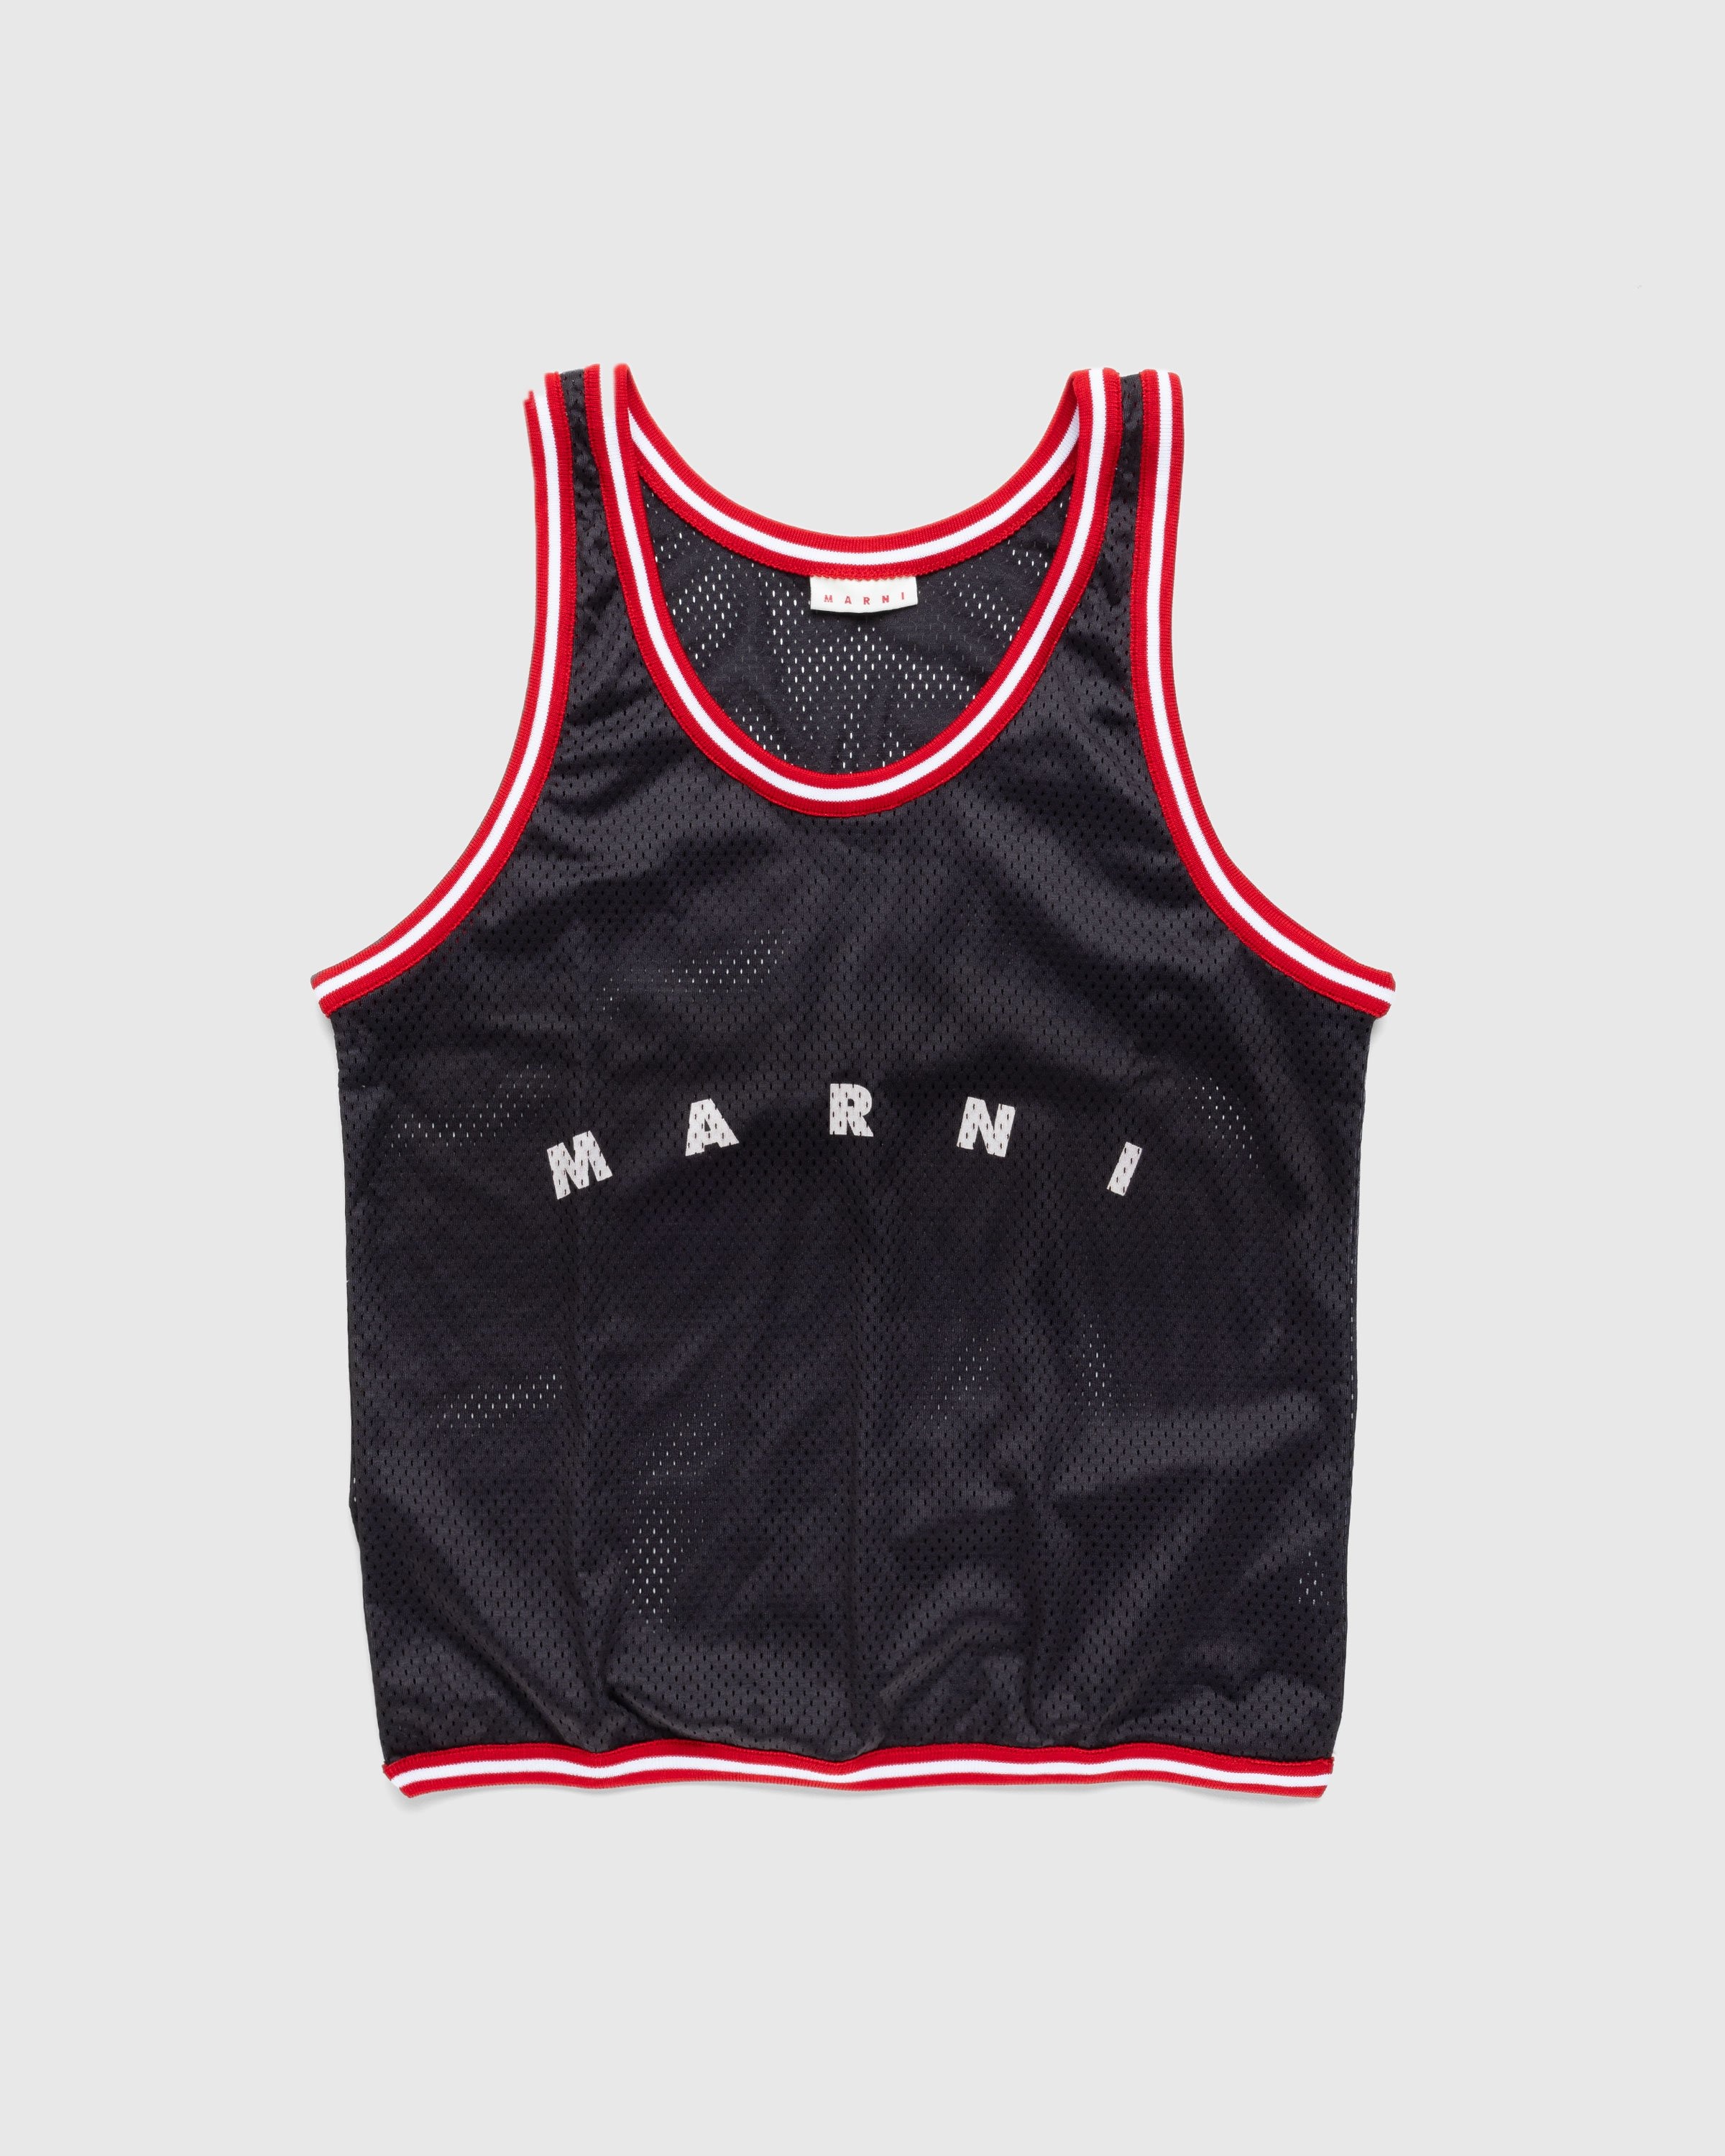 Marni – Basket Top Shopping Black Highsnobiety Shop